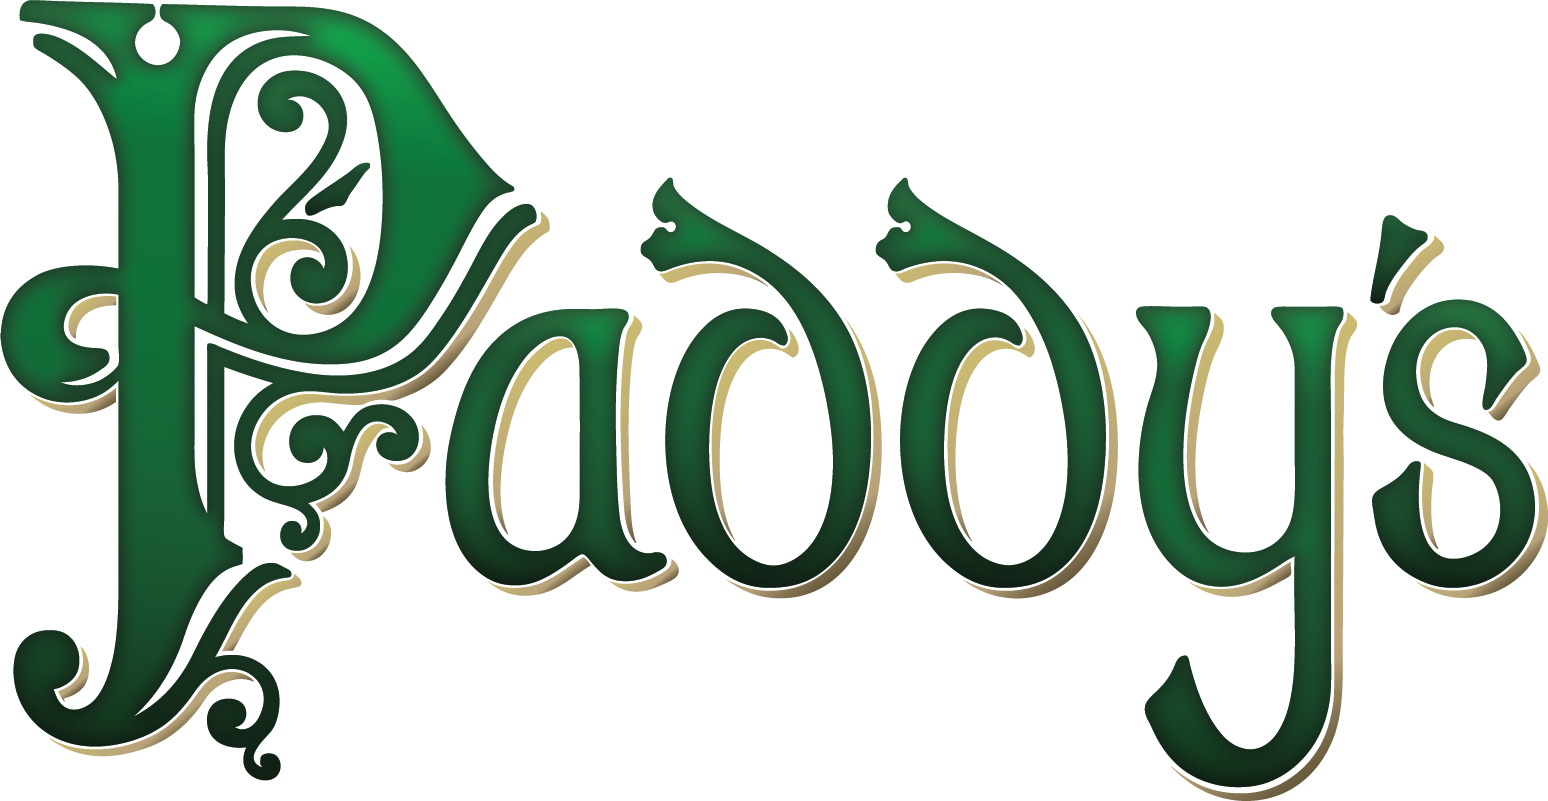 Paddy's logo